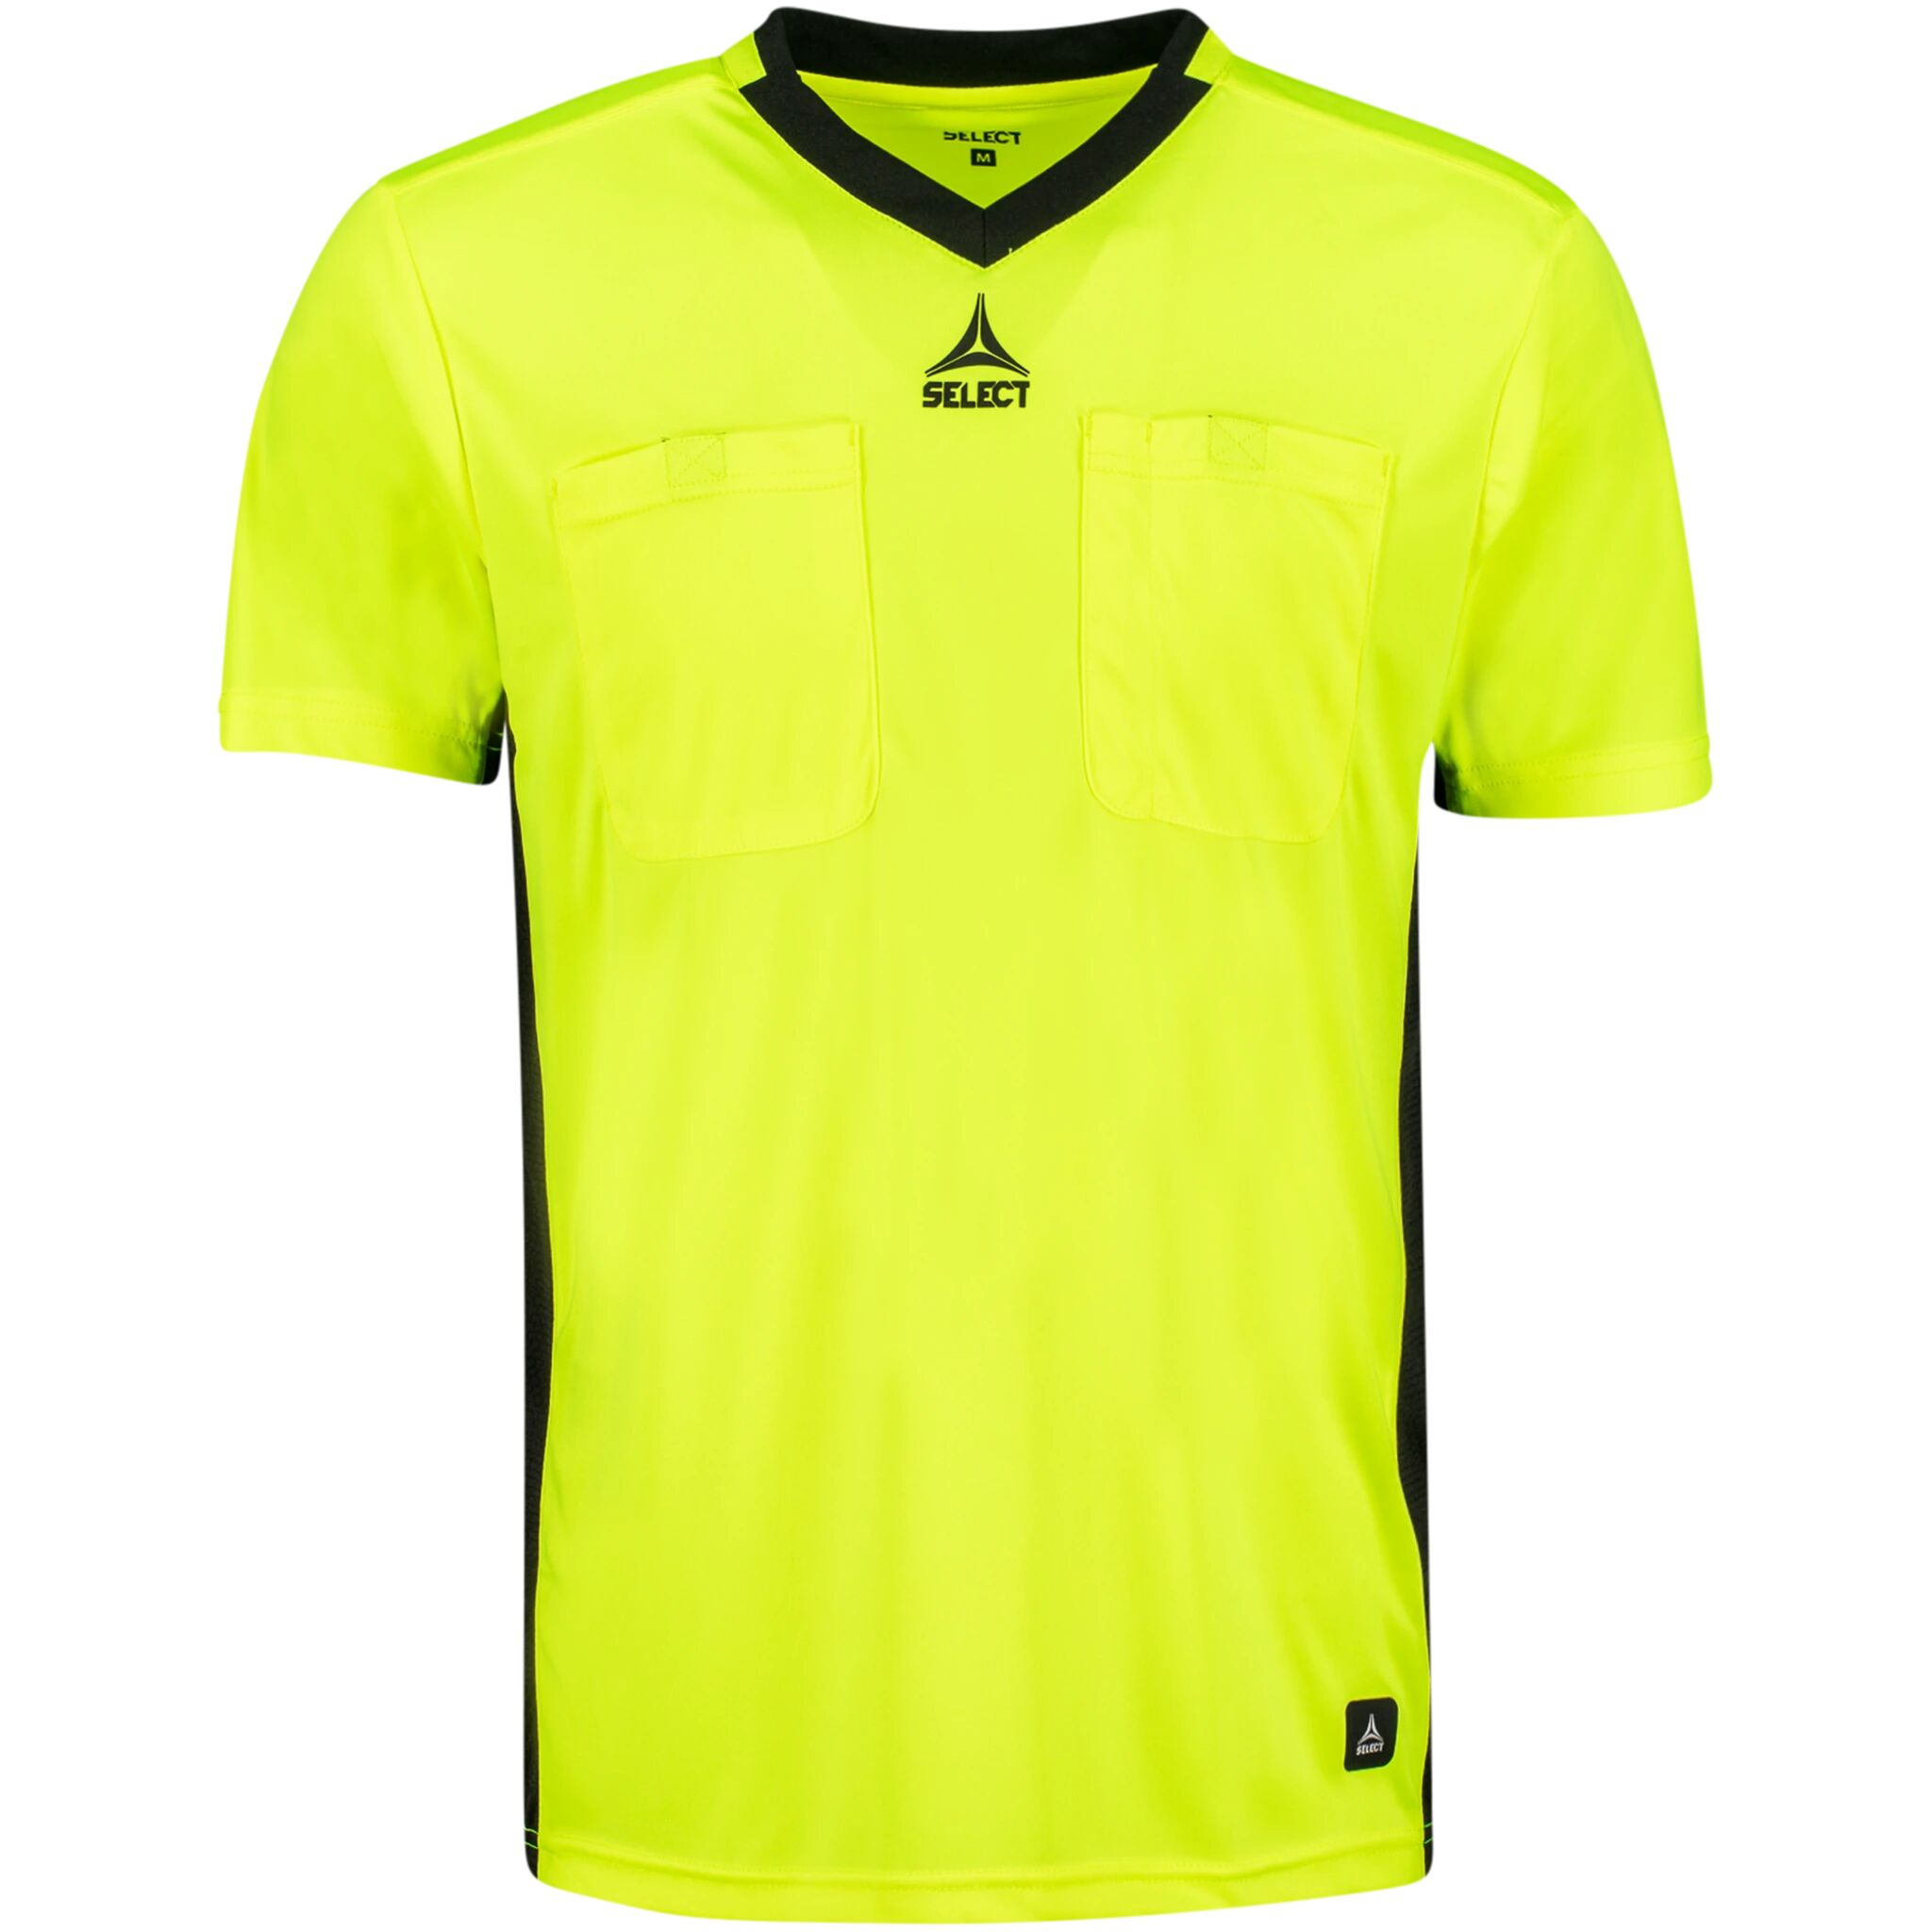 Select Referee shirt S/S v21, dommerdrakt senior XS Yellow/Black